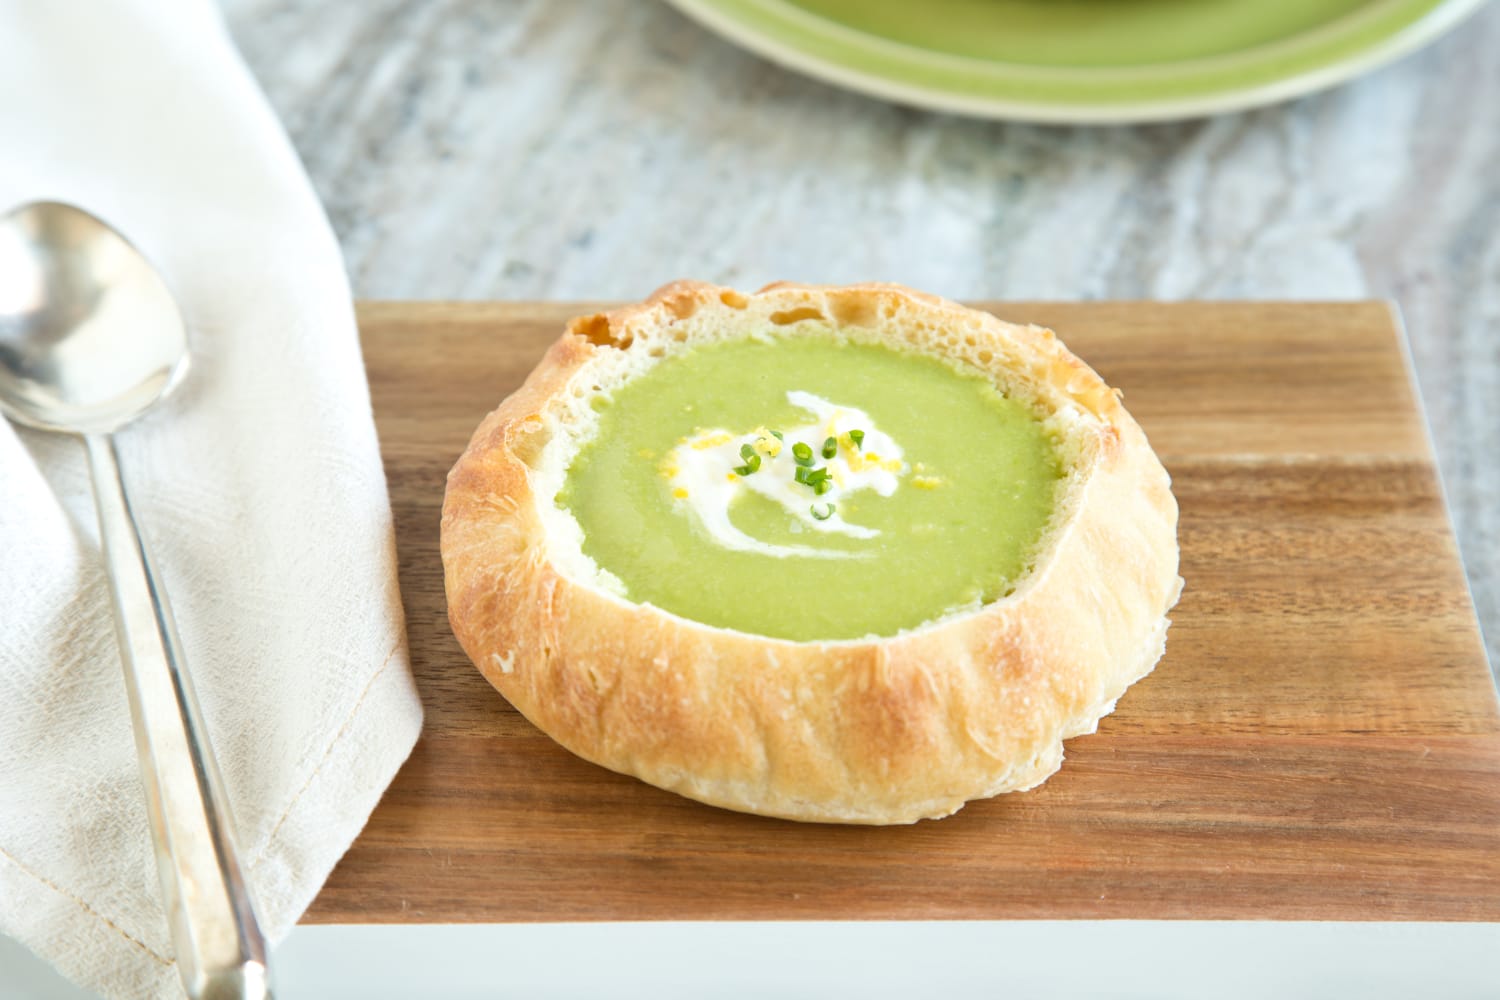 Simple, seasonal and healthy: Spring pea soup bread bowls